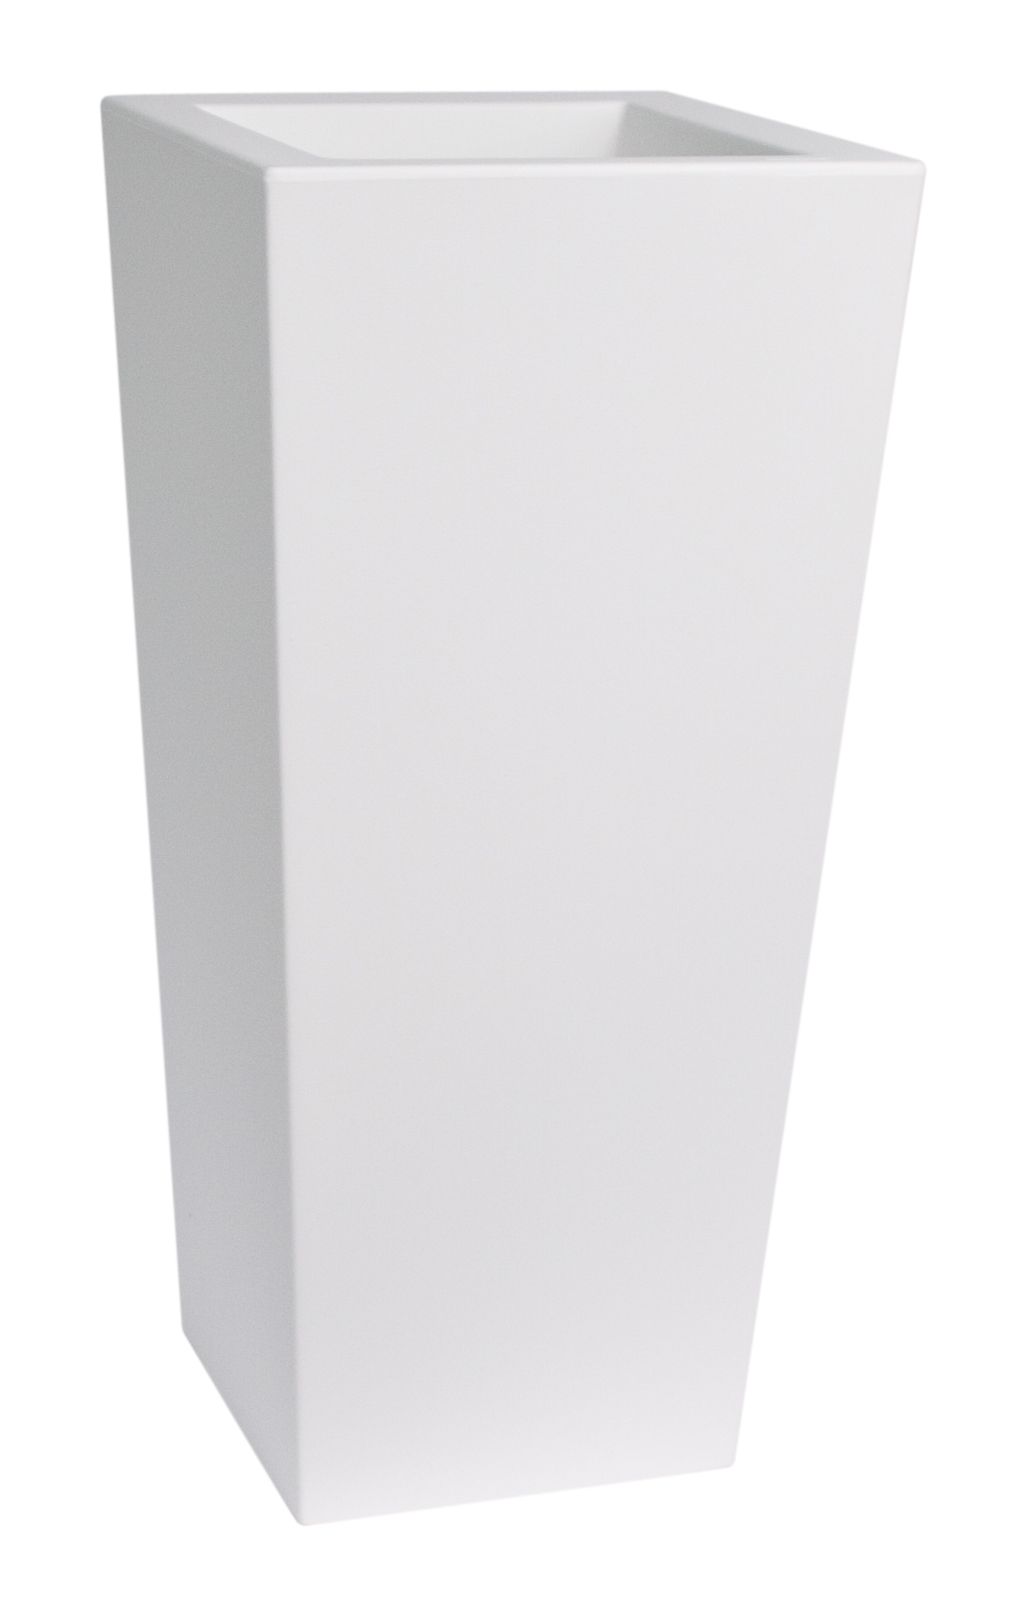 Plust - Dizajnový kvetináč KIAM, 35 x 35 cm - biely